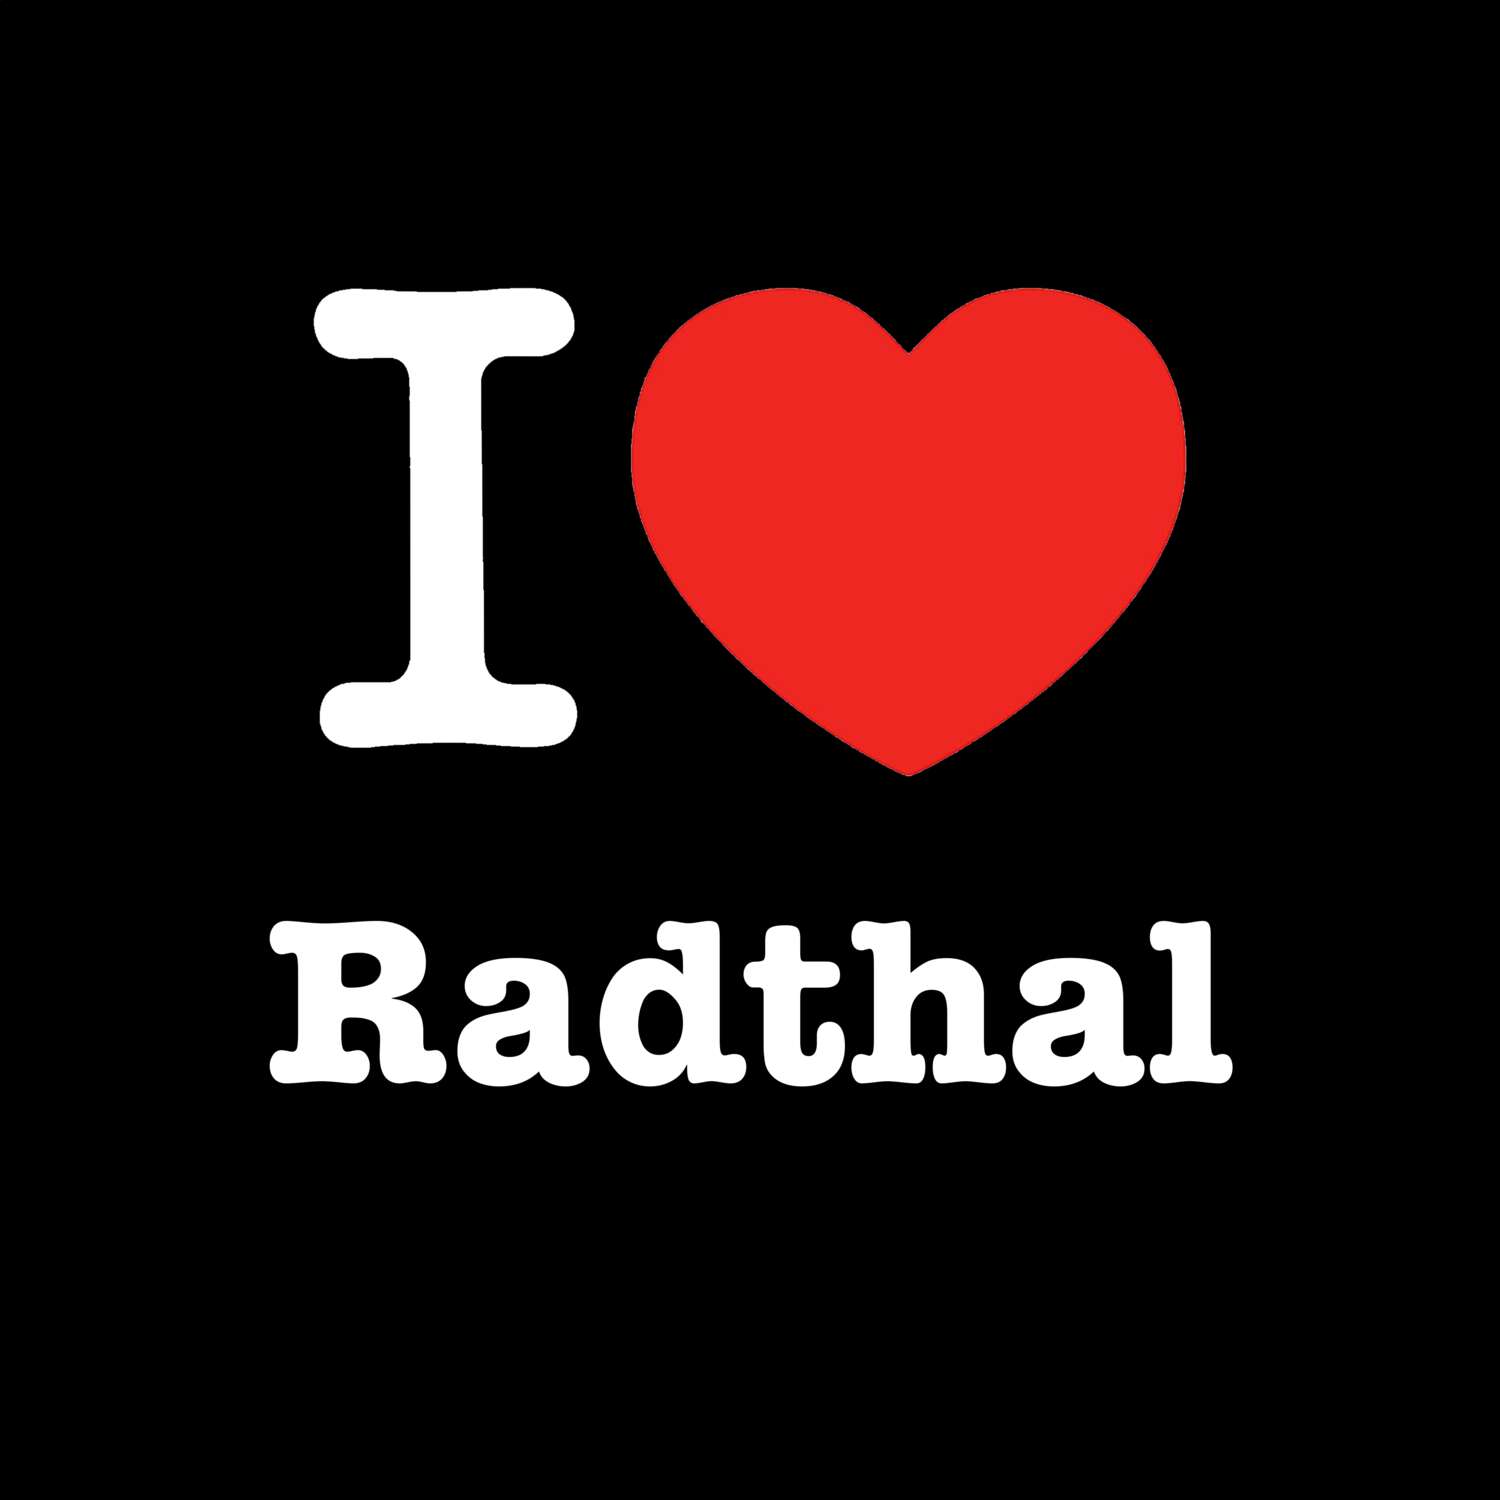 Radthal T-Shirt »I love«